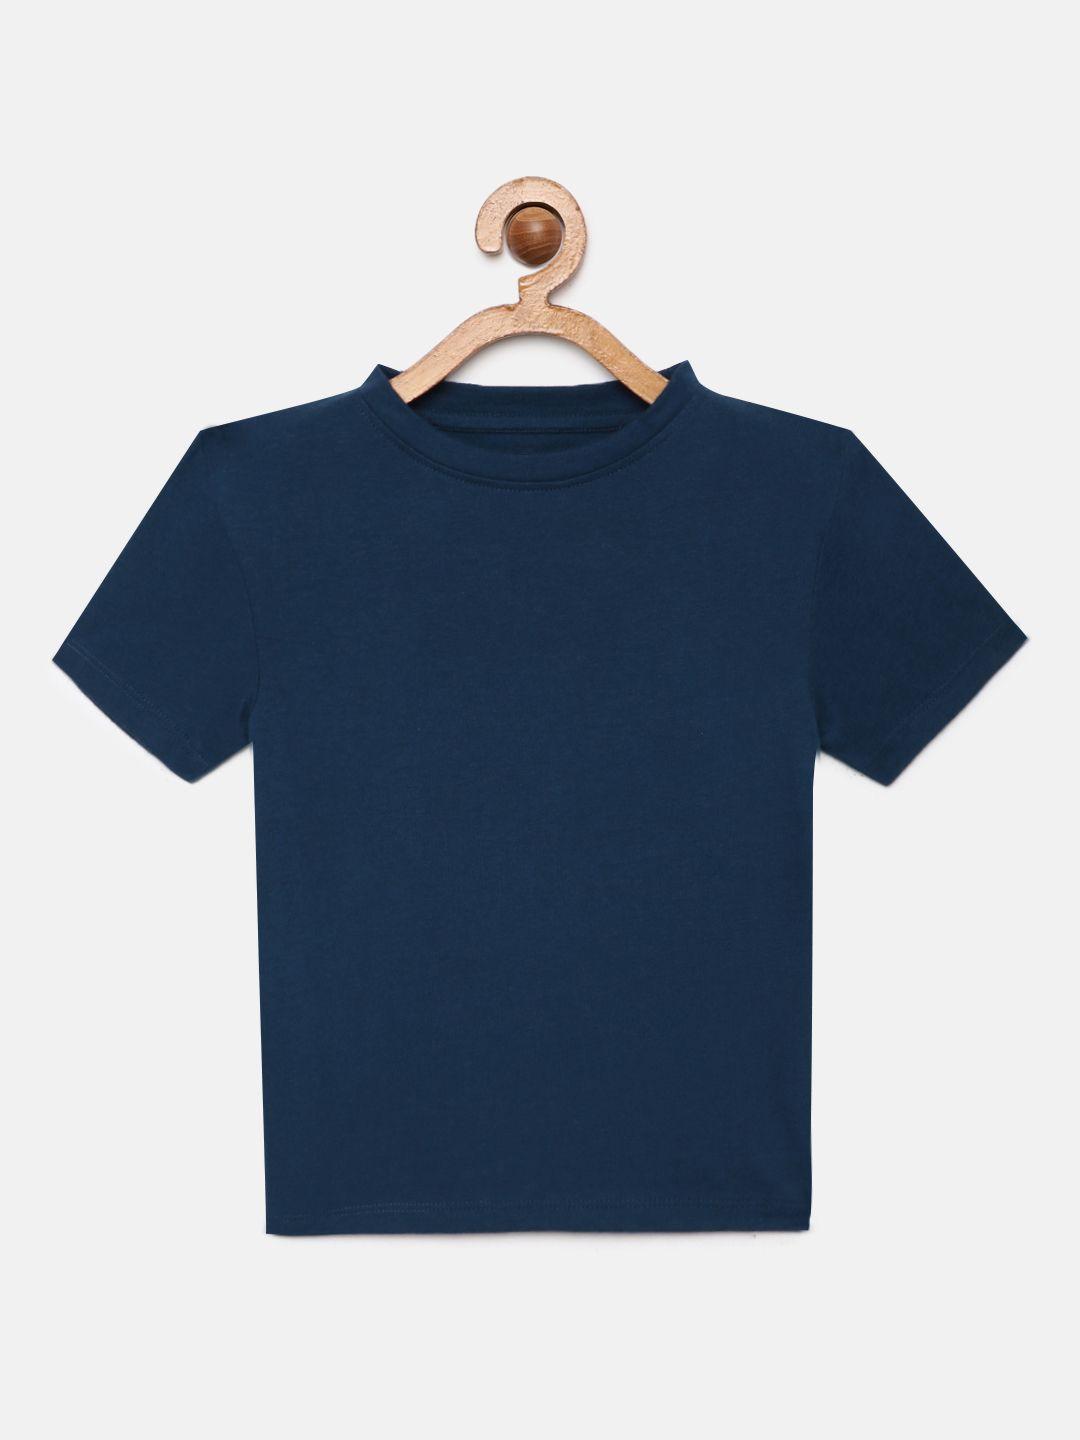 metro kids company boys navy blue solid pure cotton t-shirt